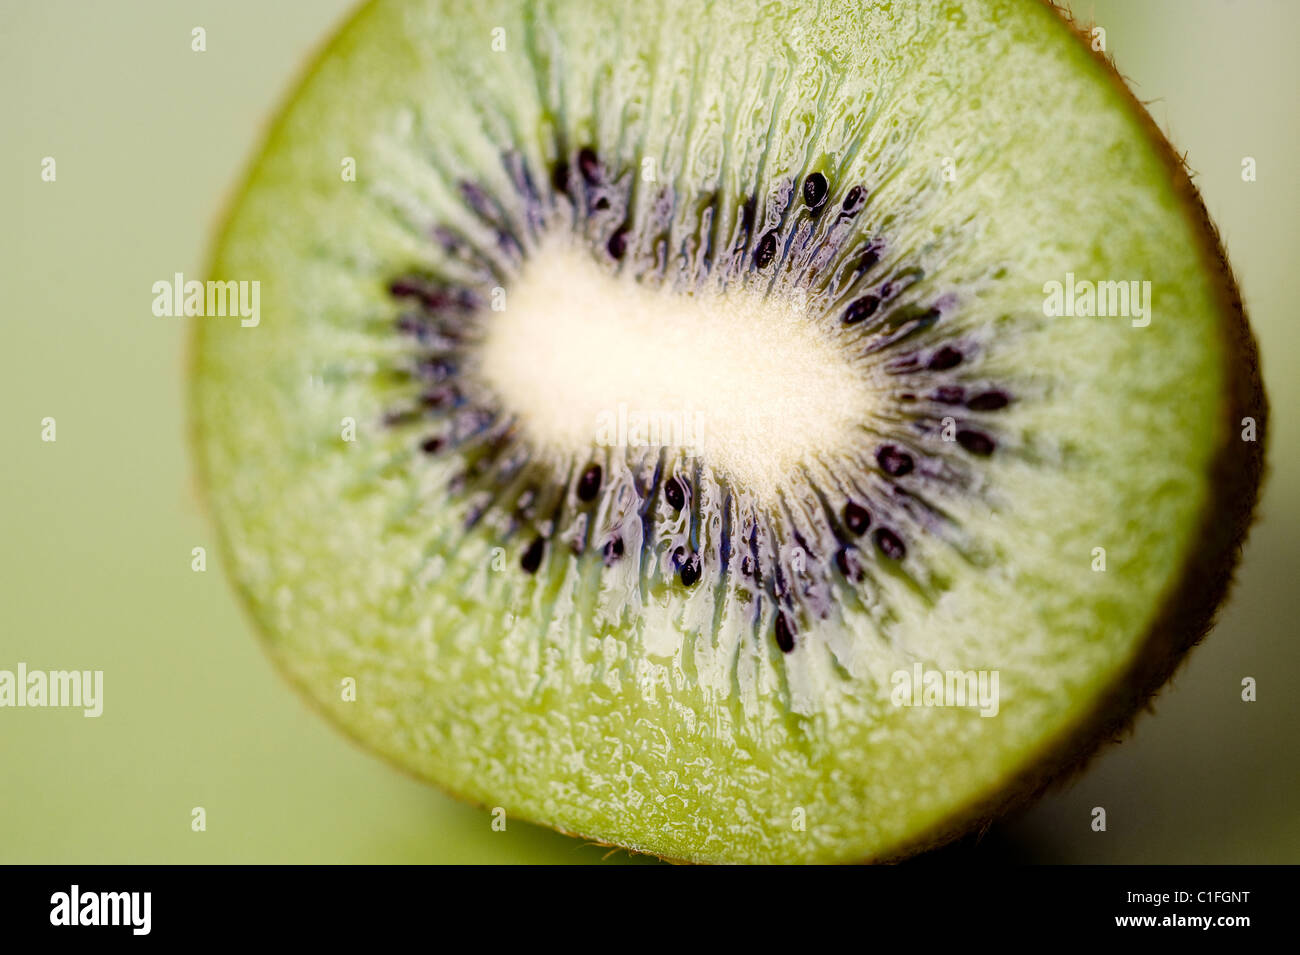 A kiwifruit cut in half Stock Photo